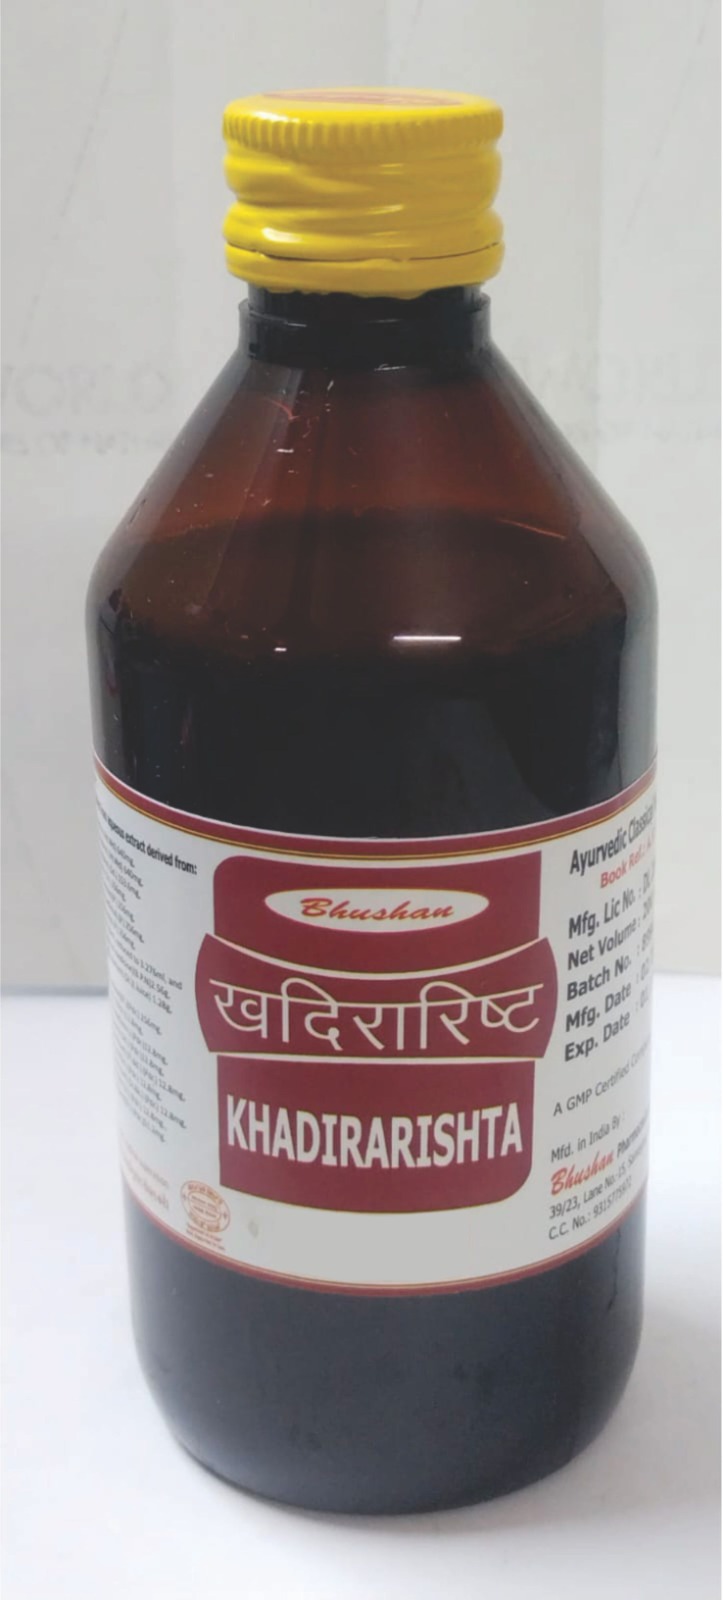 Khadirarishta